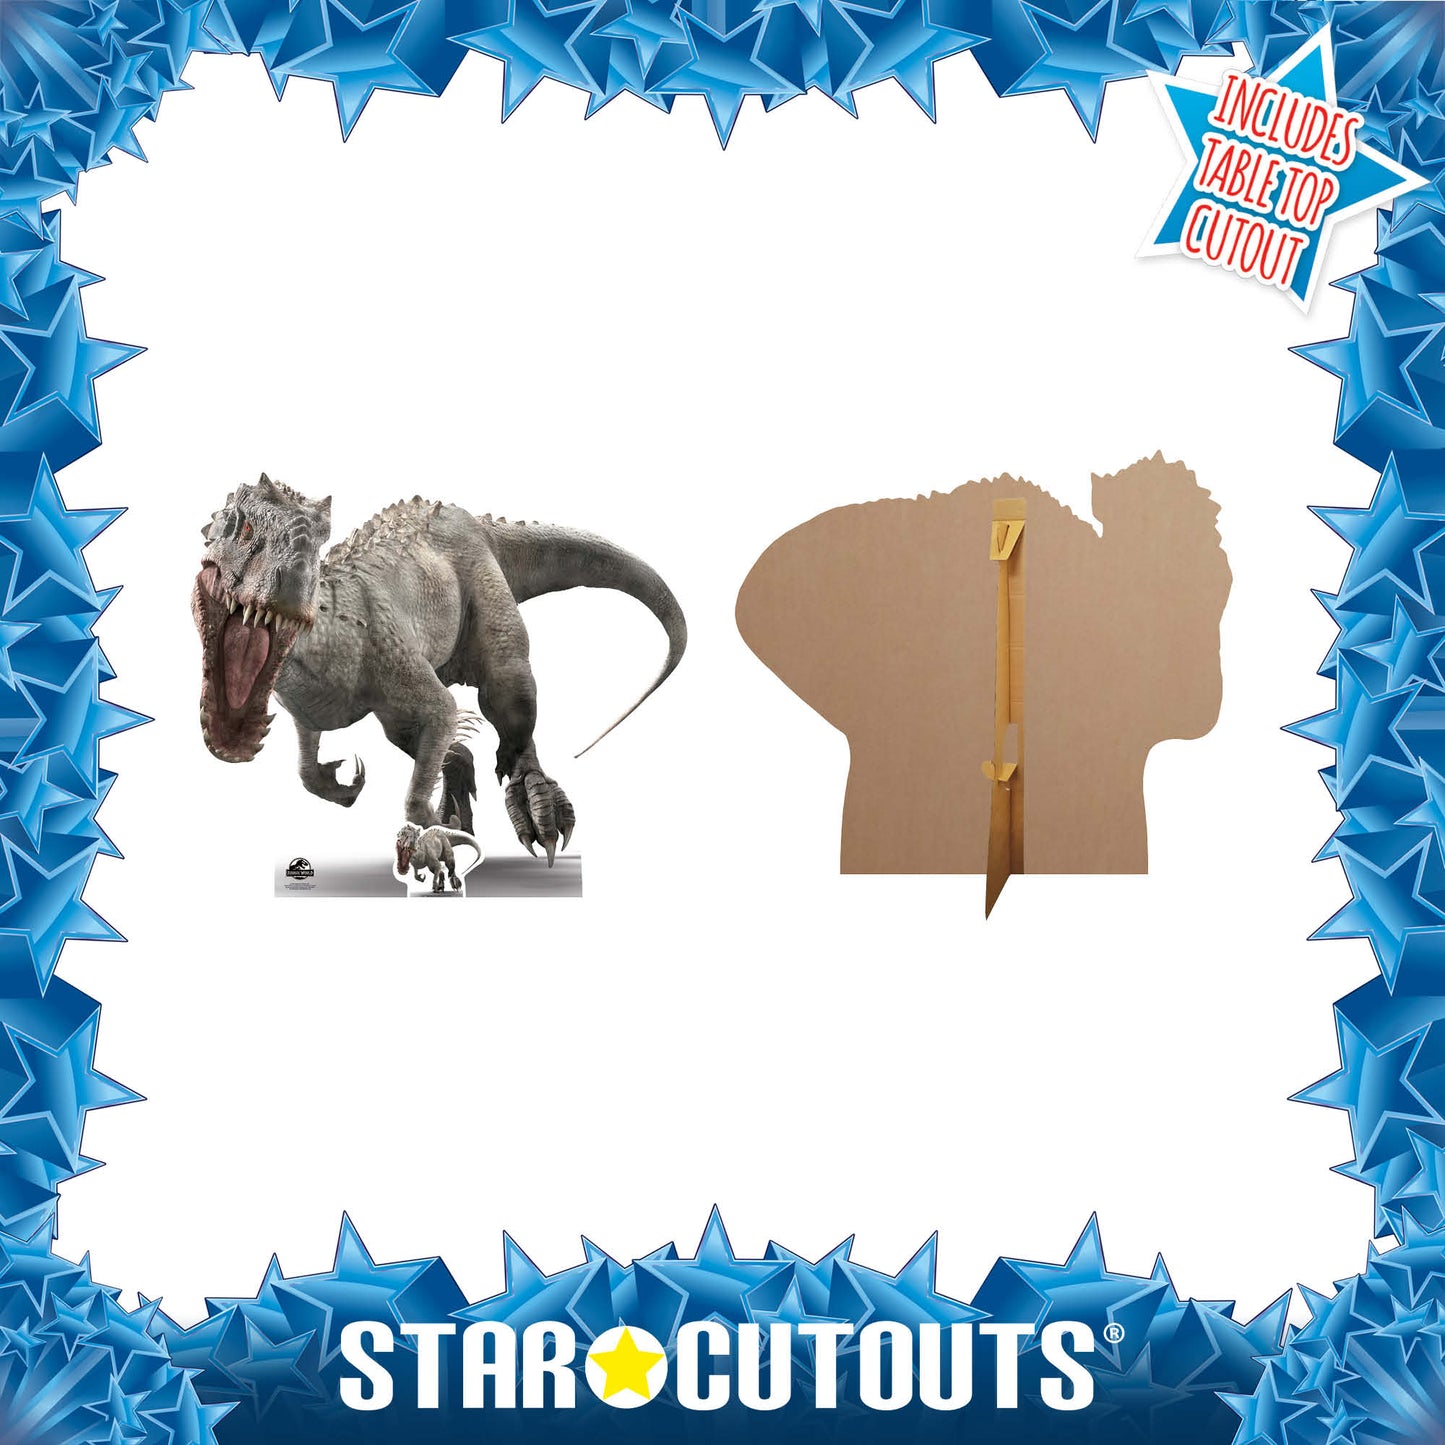 SC1295 Indominus (Face on roar) Jurassic World Dinosaur Cardboard Cut Out Height 118cm